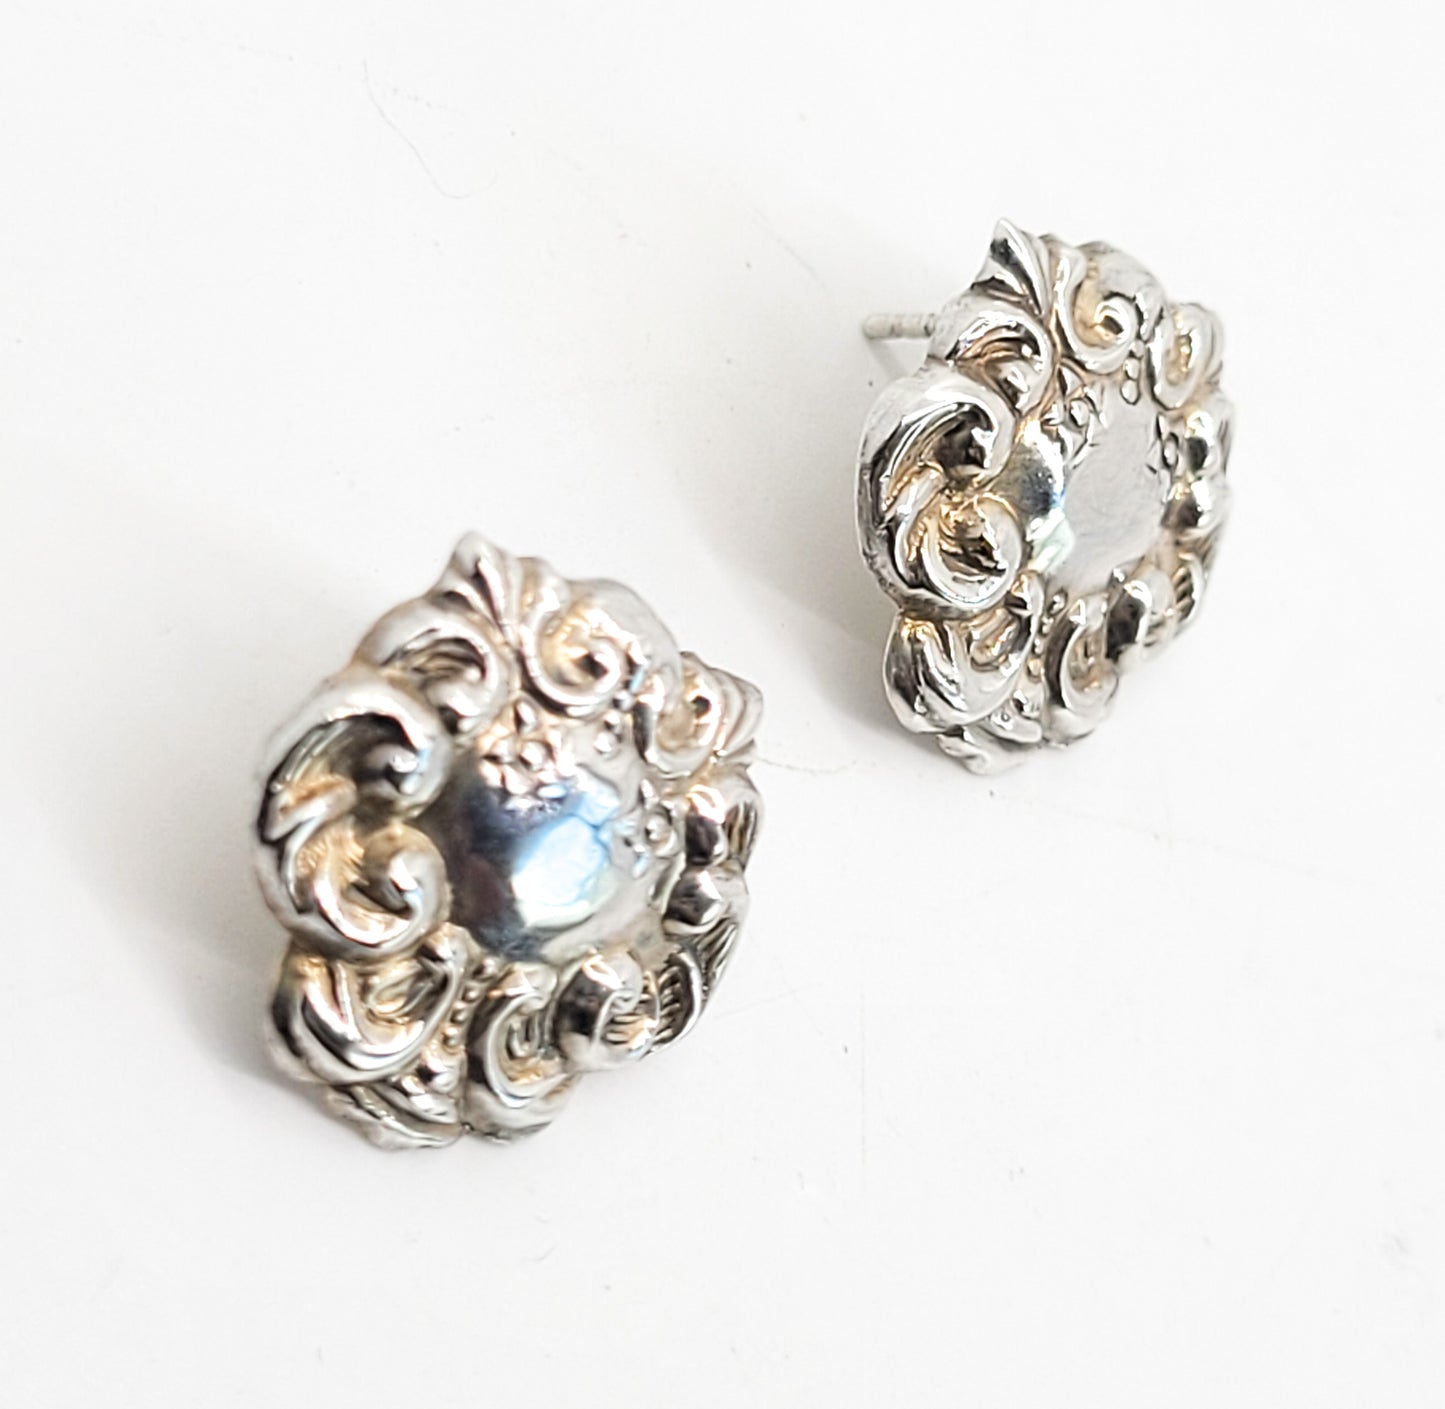 Art Nouveau style repousse shield sterling silver vintage earrings signed SE